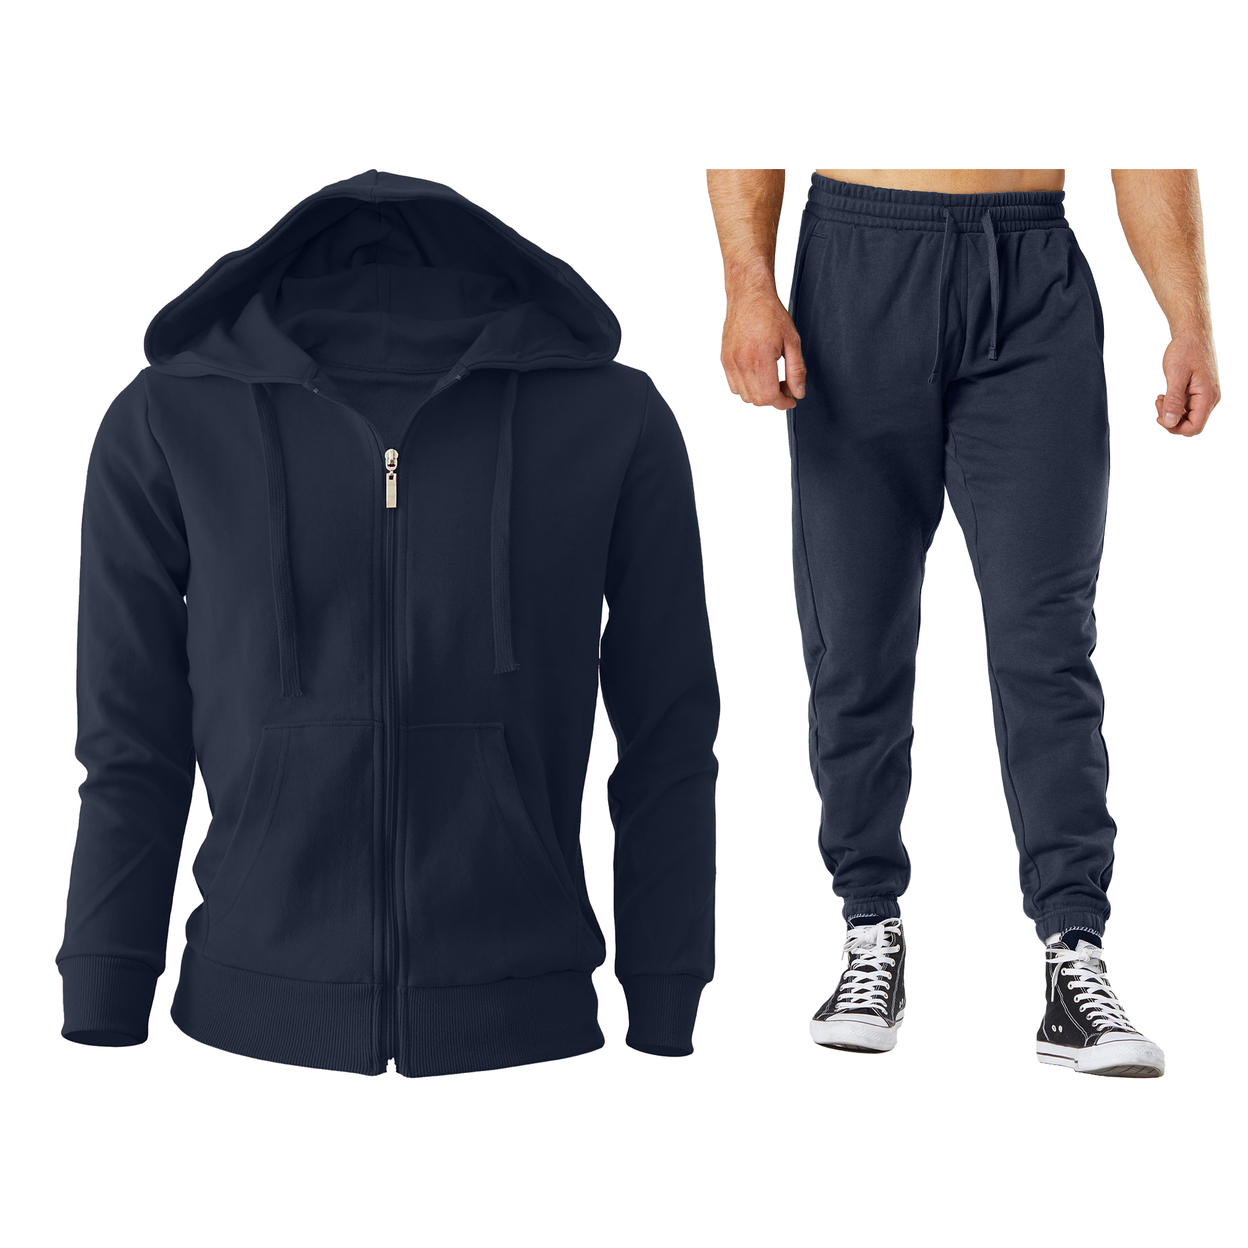 2/4-Piece: Men's Winter Warm Cozy Athletic Multi-Pockets BIG & TALL Sweatsuit Set - Black, 1, Small